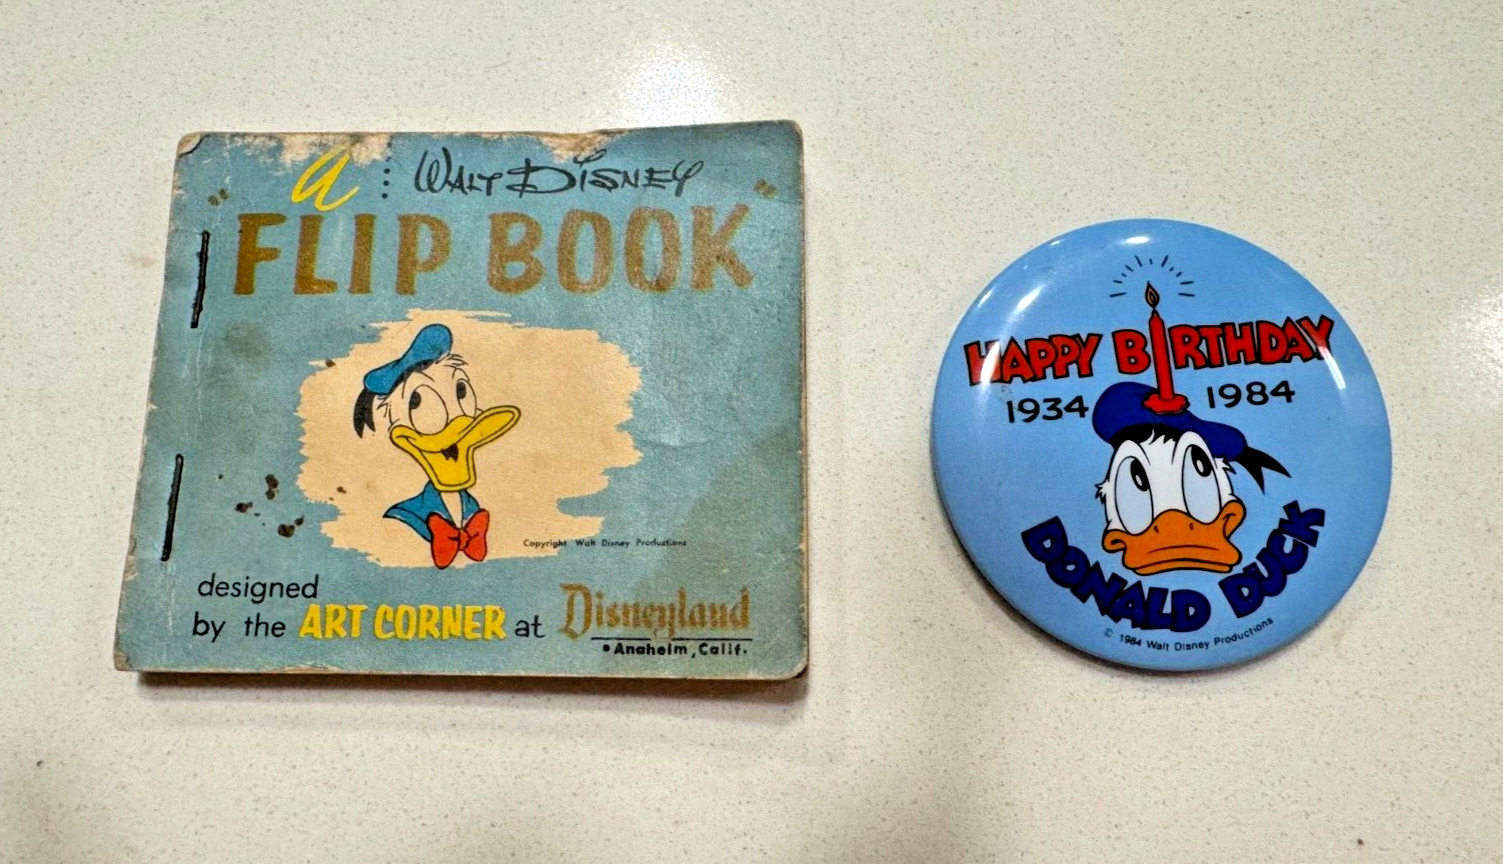 VTG 50s/60s Disneyland FLIP BOOK Donald Duck & 1984 Happy 50th Birthday Button